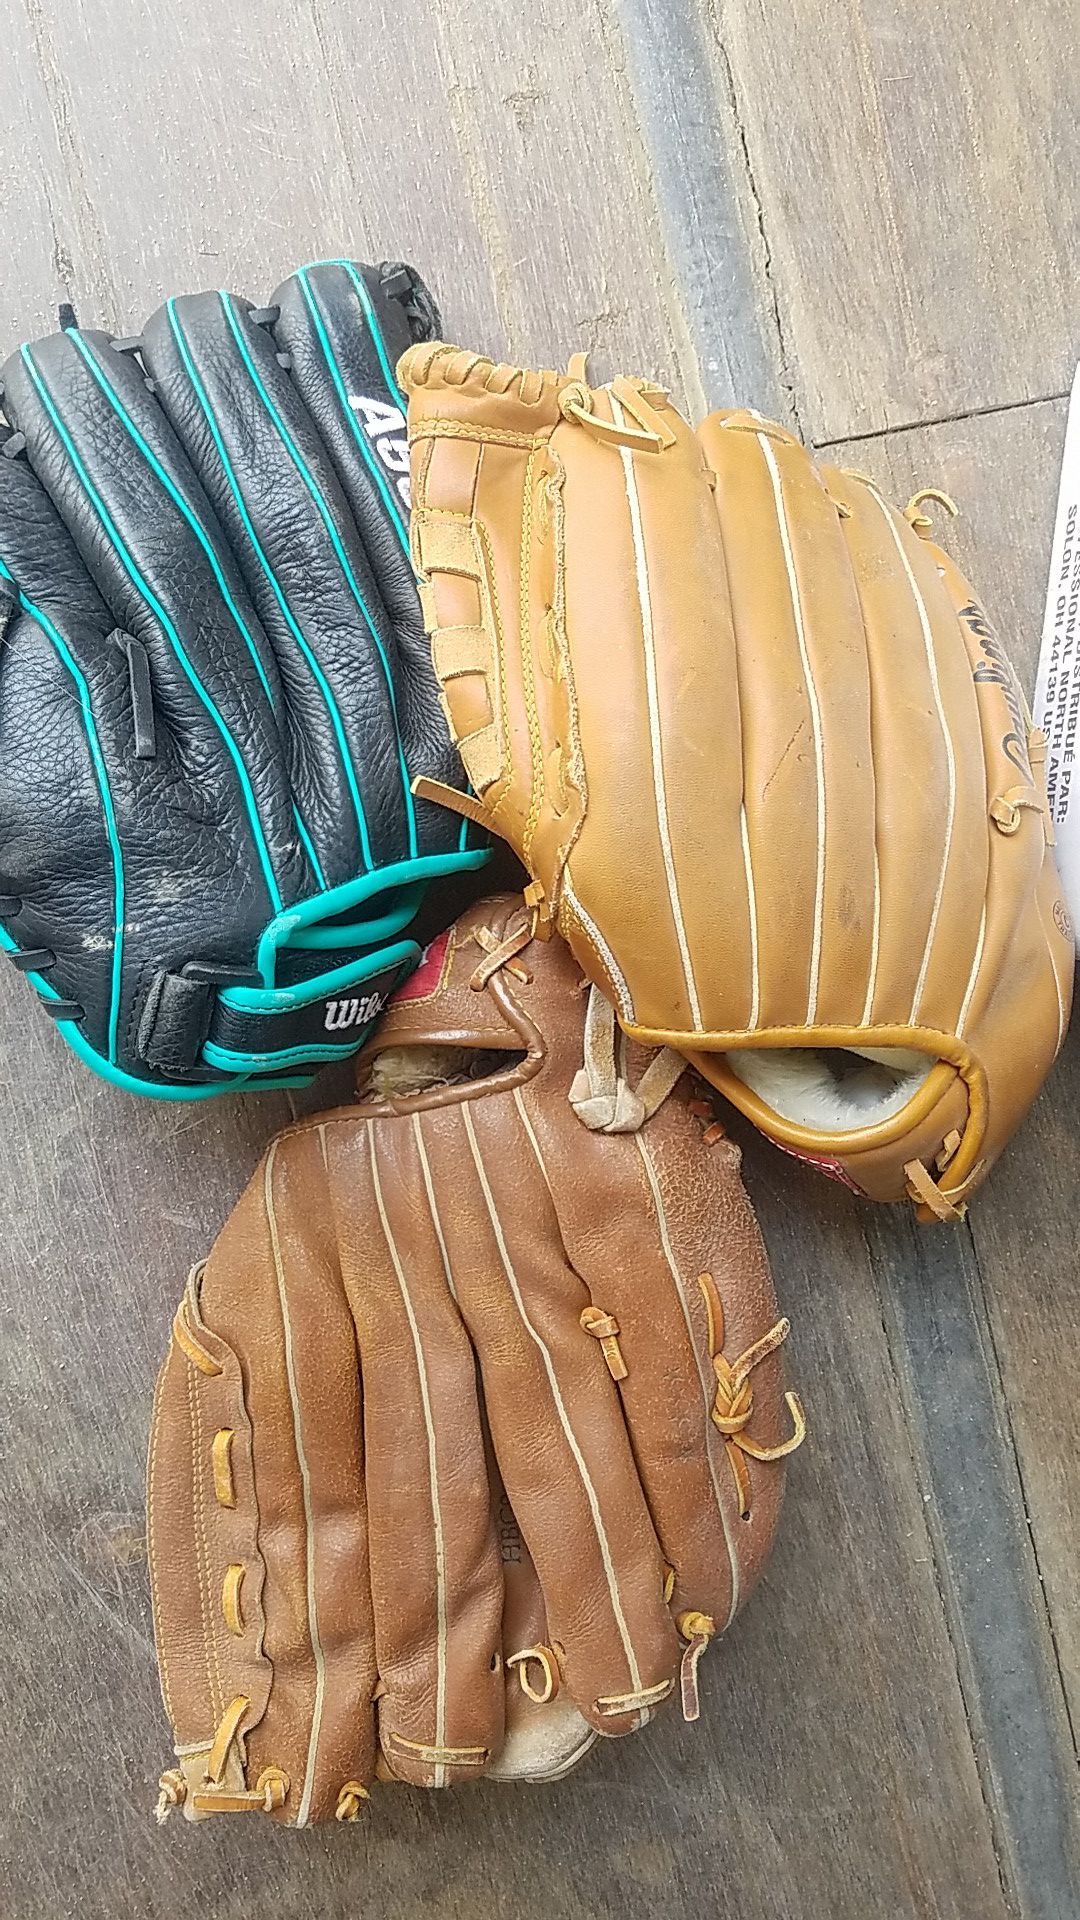 Baseball Gloves and Softballs